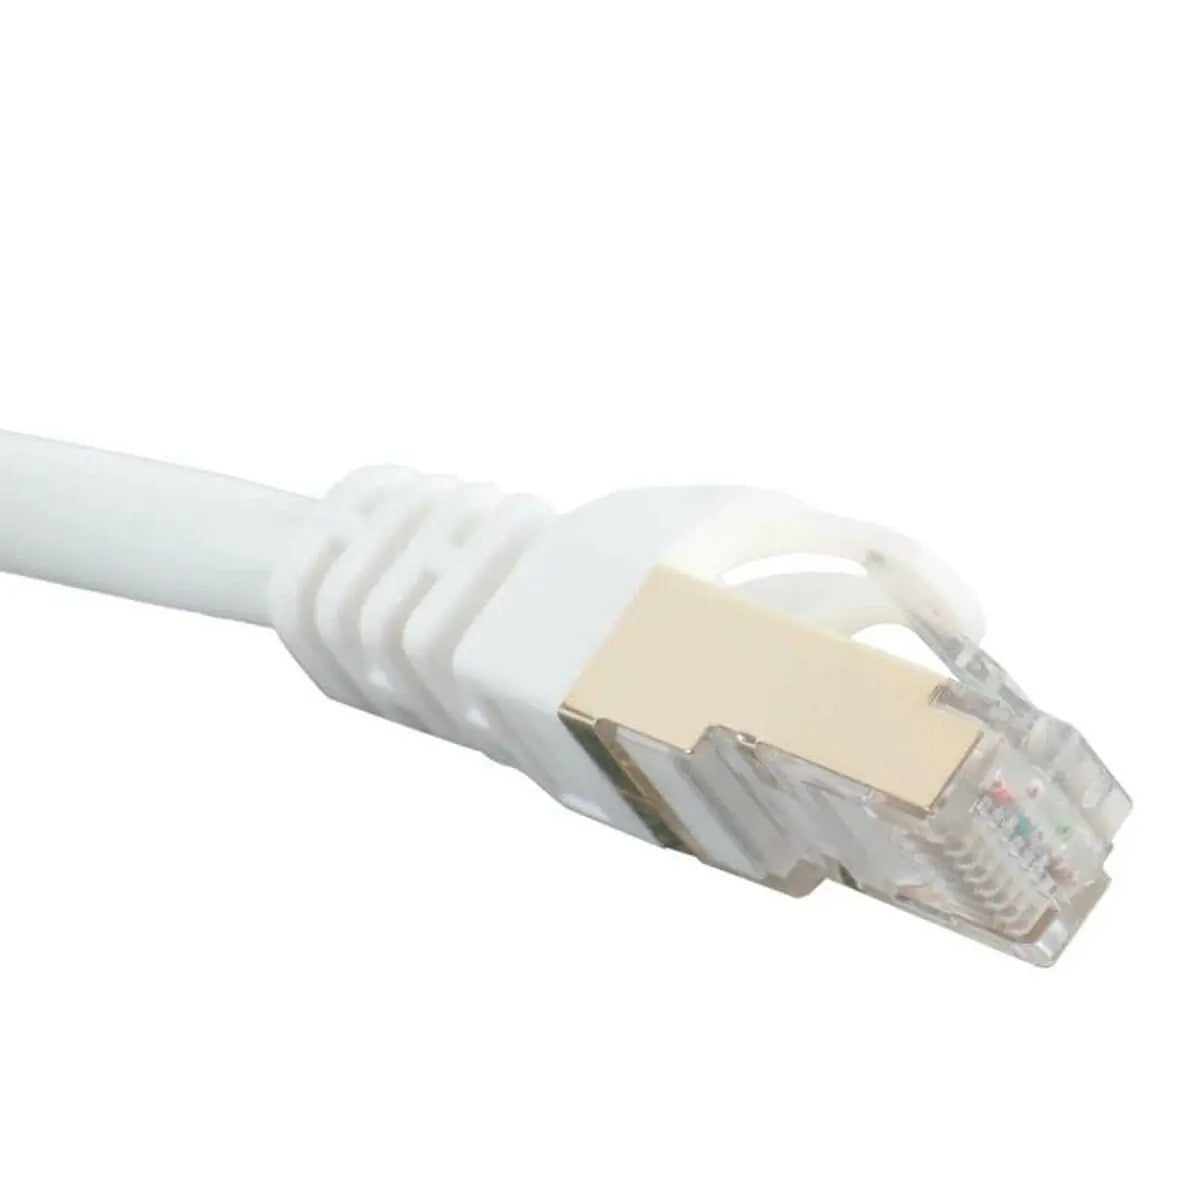 FTP Category 7 Rigid Network Cable iggual IGG318652 White 2 m - IGSI Europe Ltd